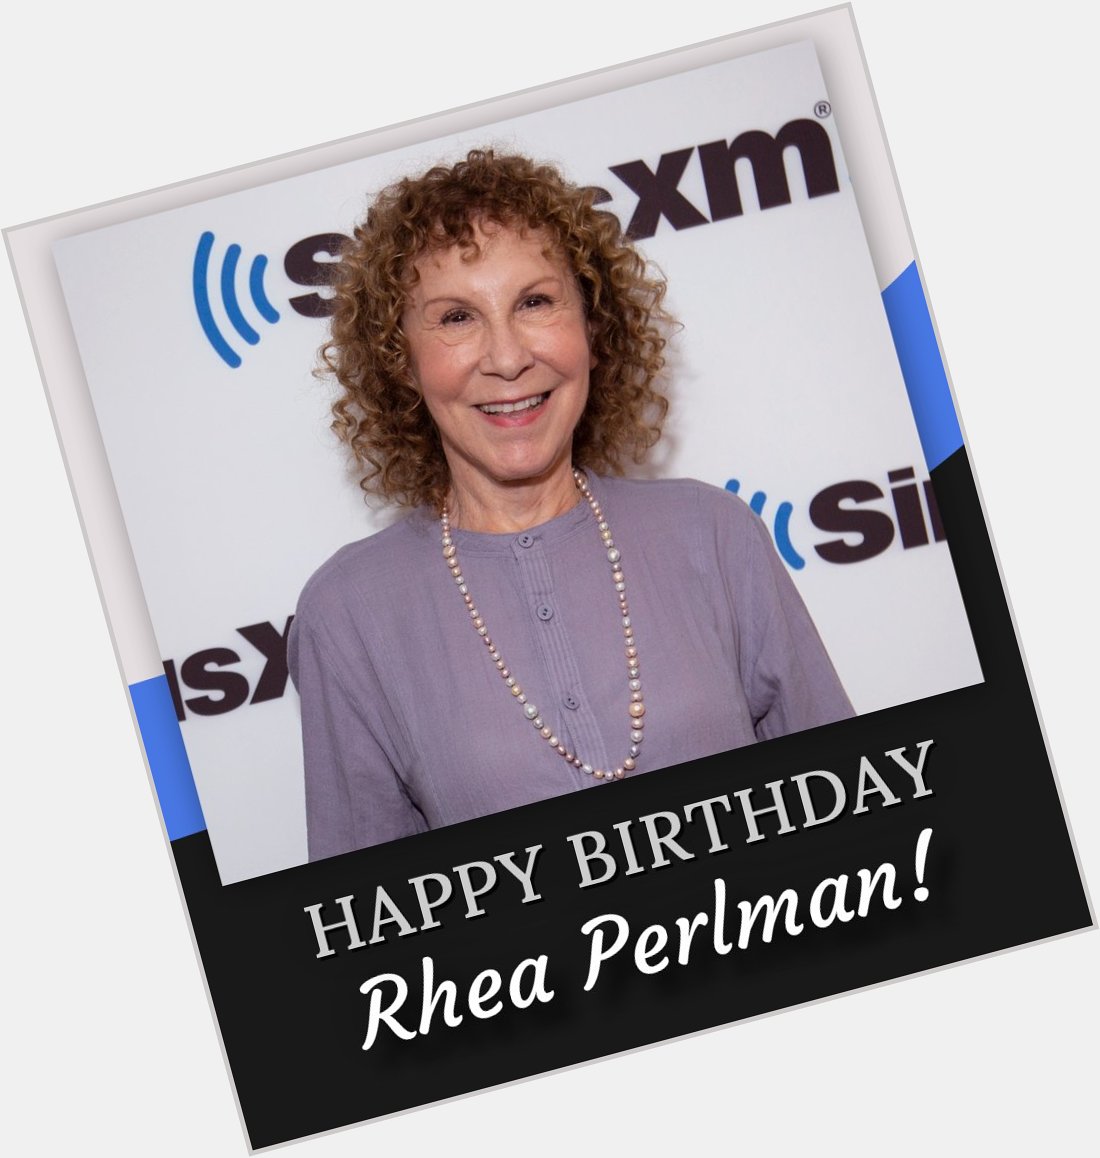 Happy birthday, Rhea Perlman! 